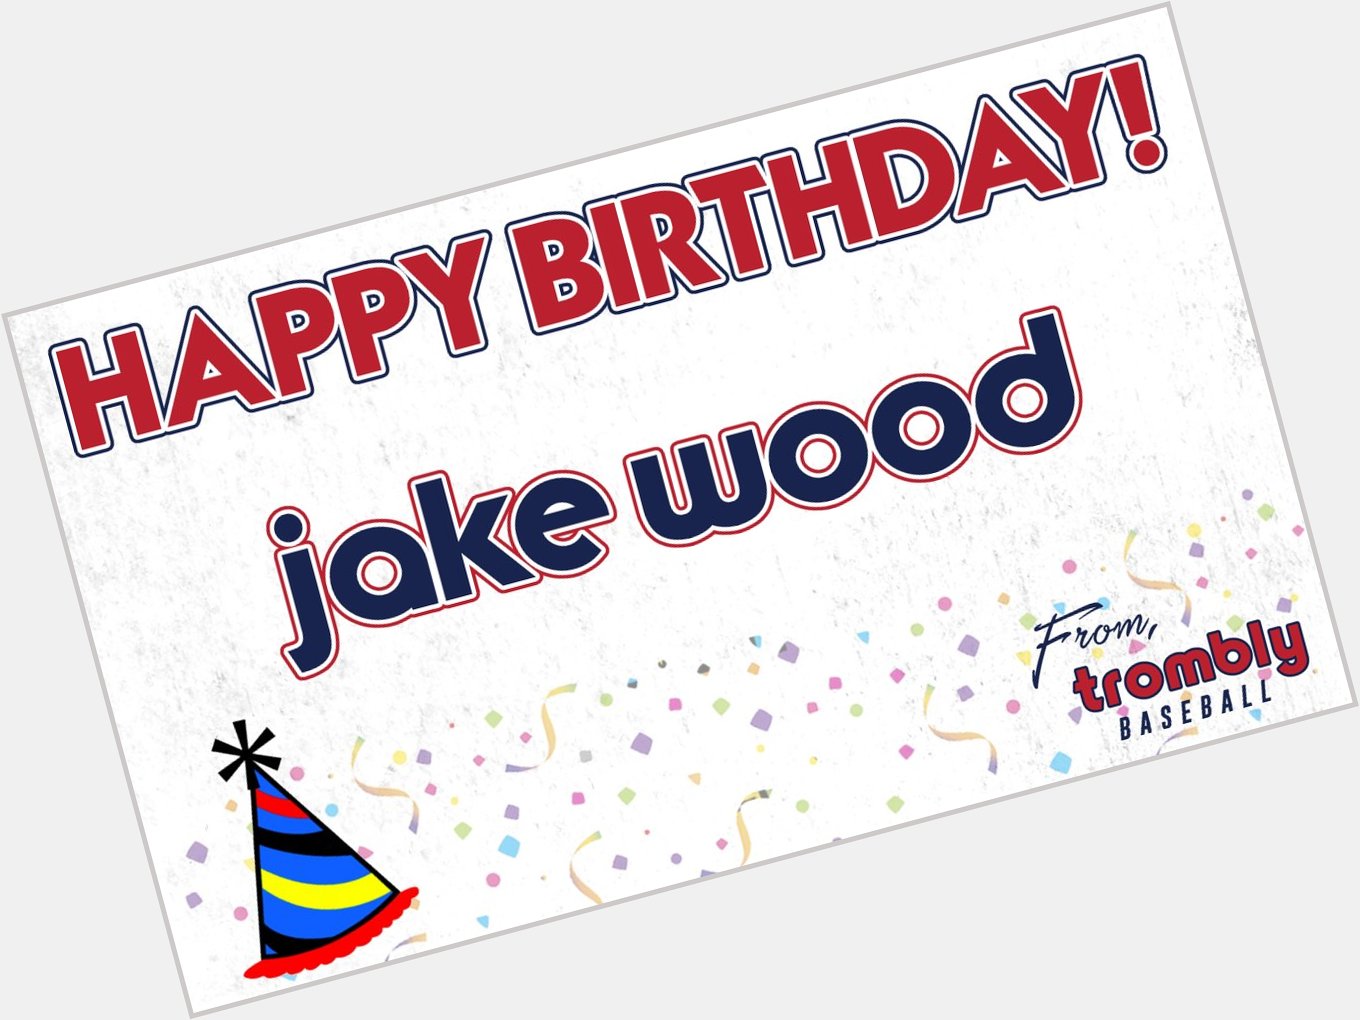 Happy Bday to Jake Wood!!! 